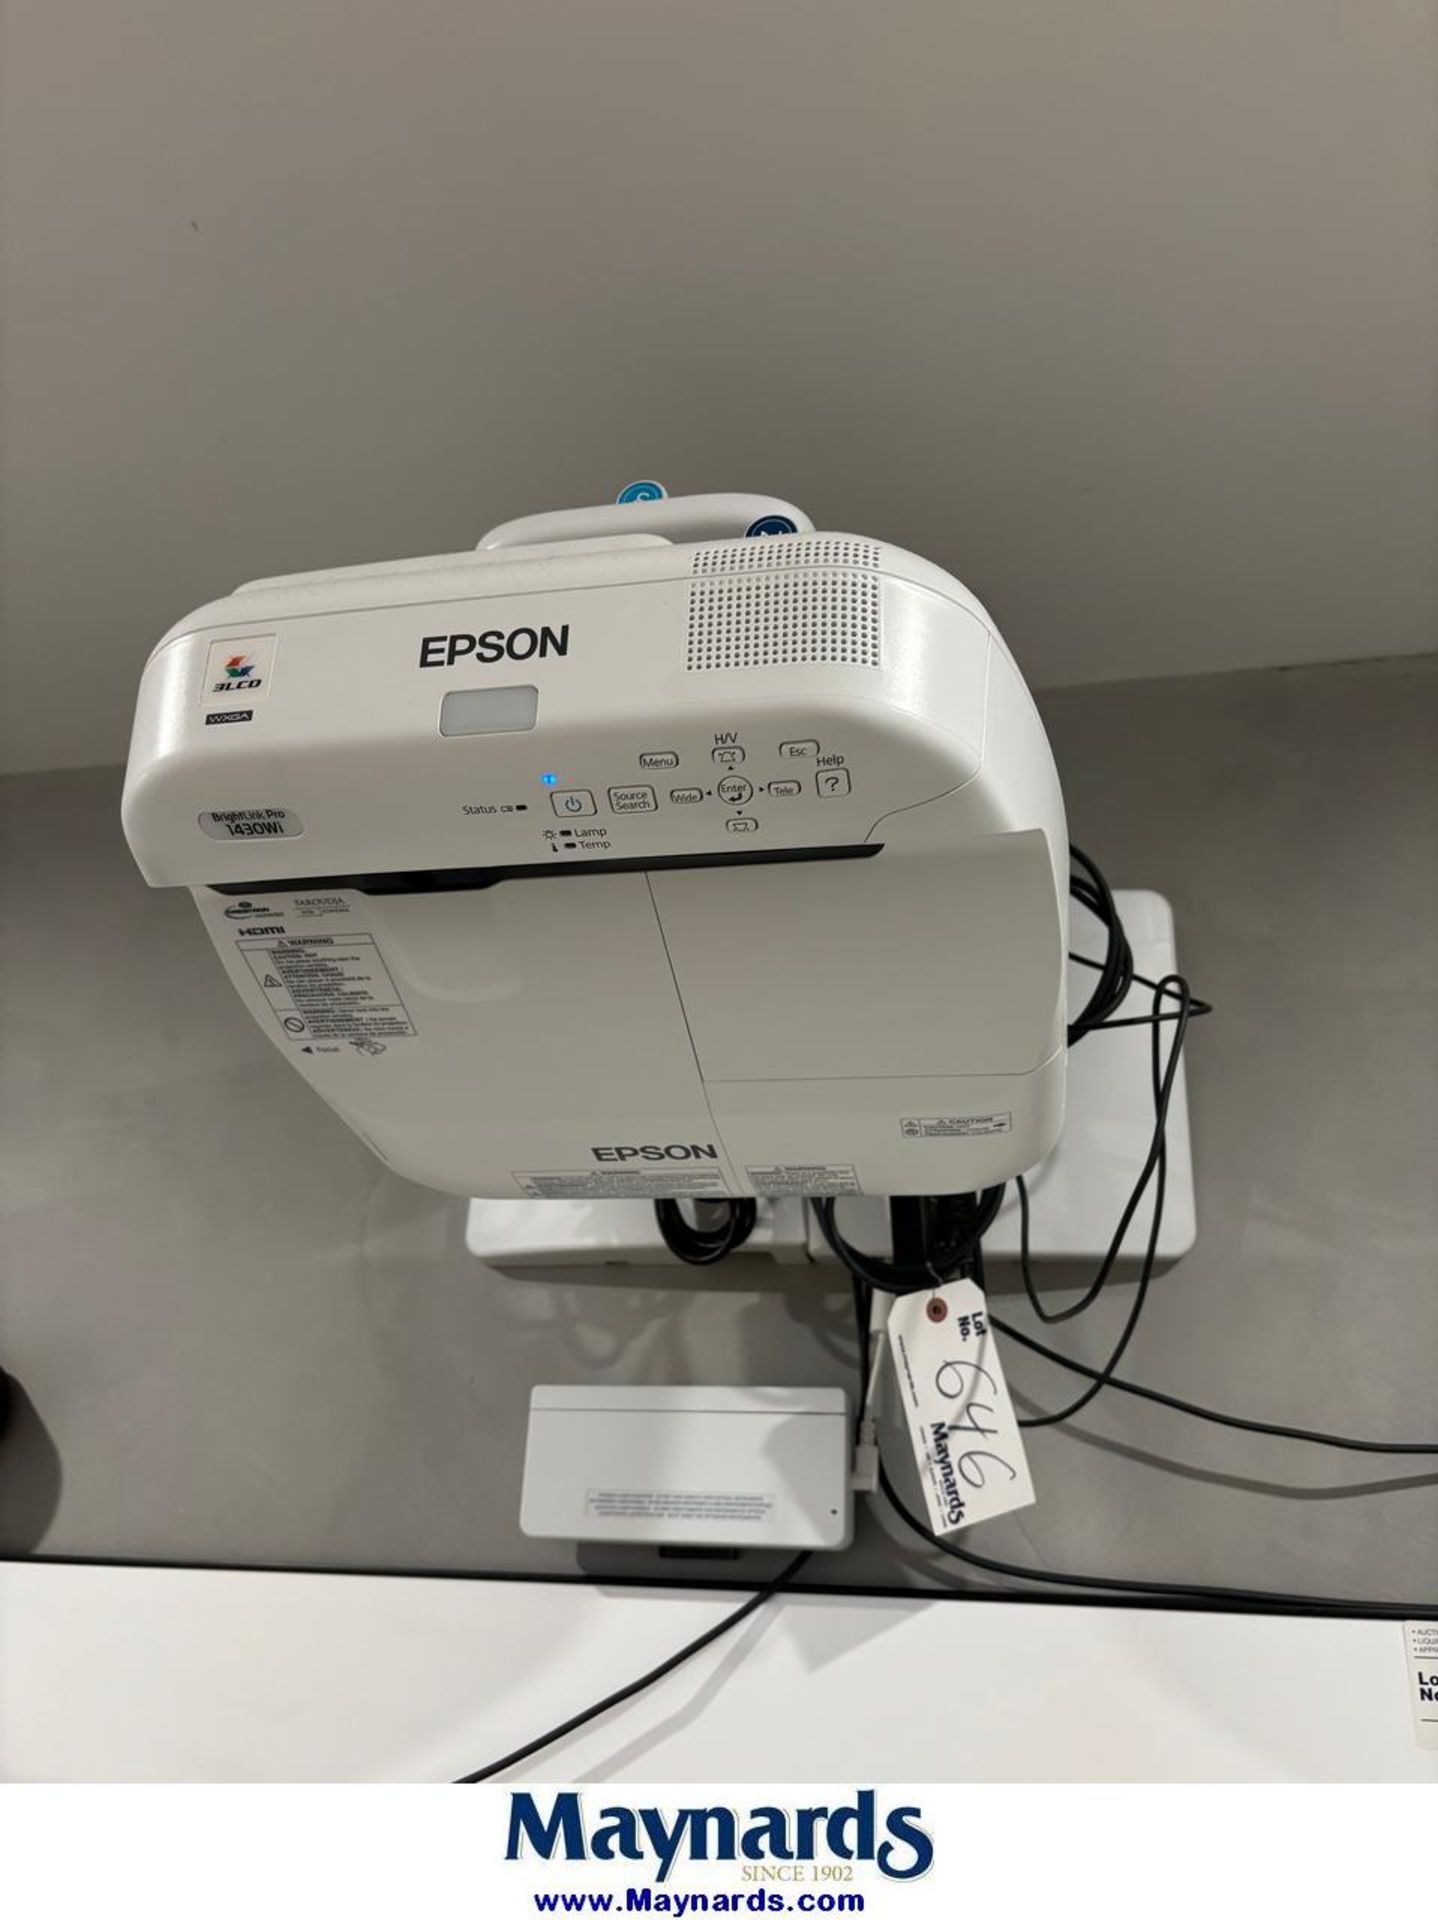 Epson Brightlight Pro 1430Wi overhead projector